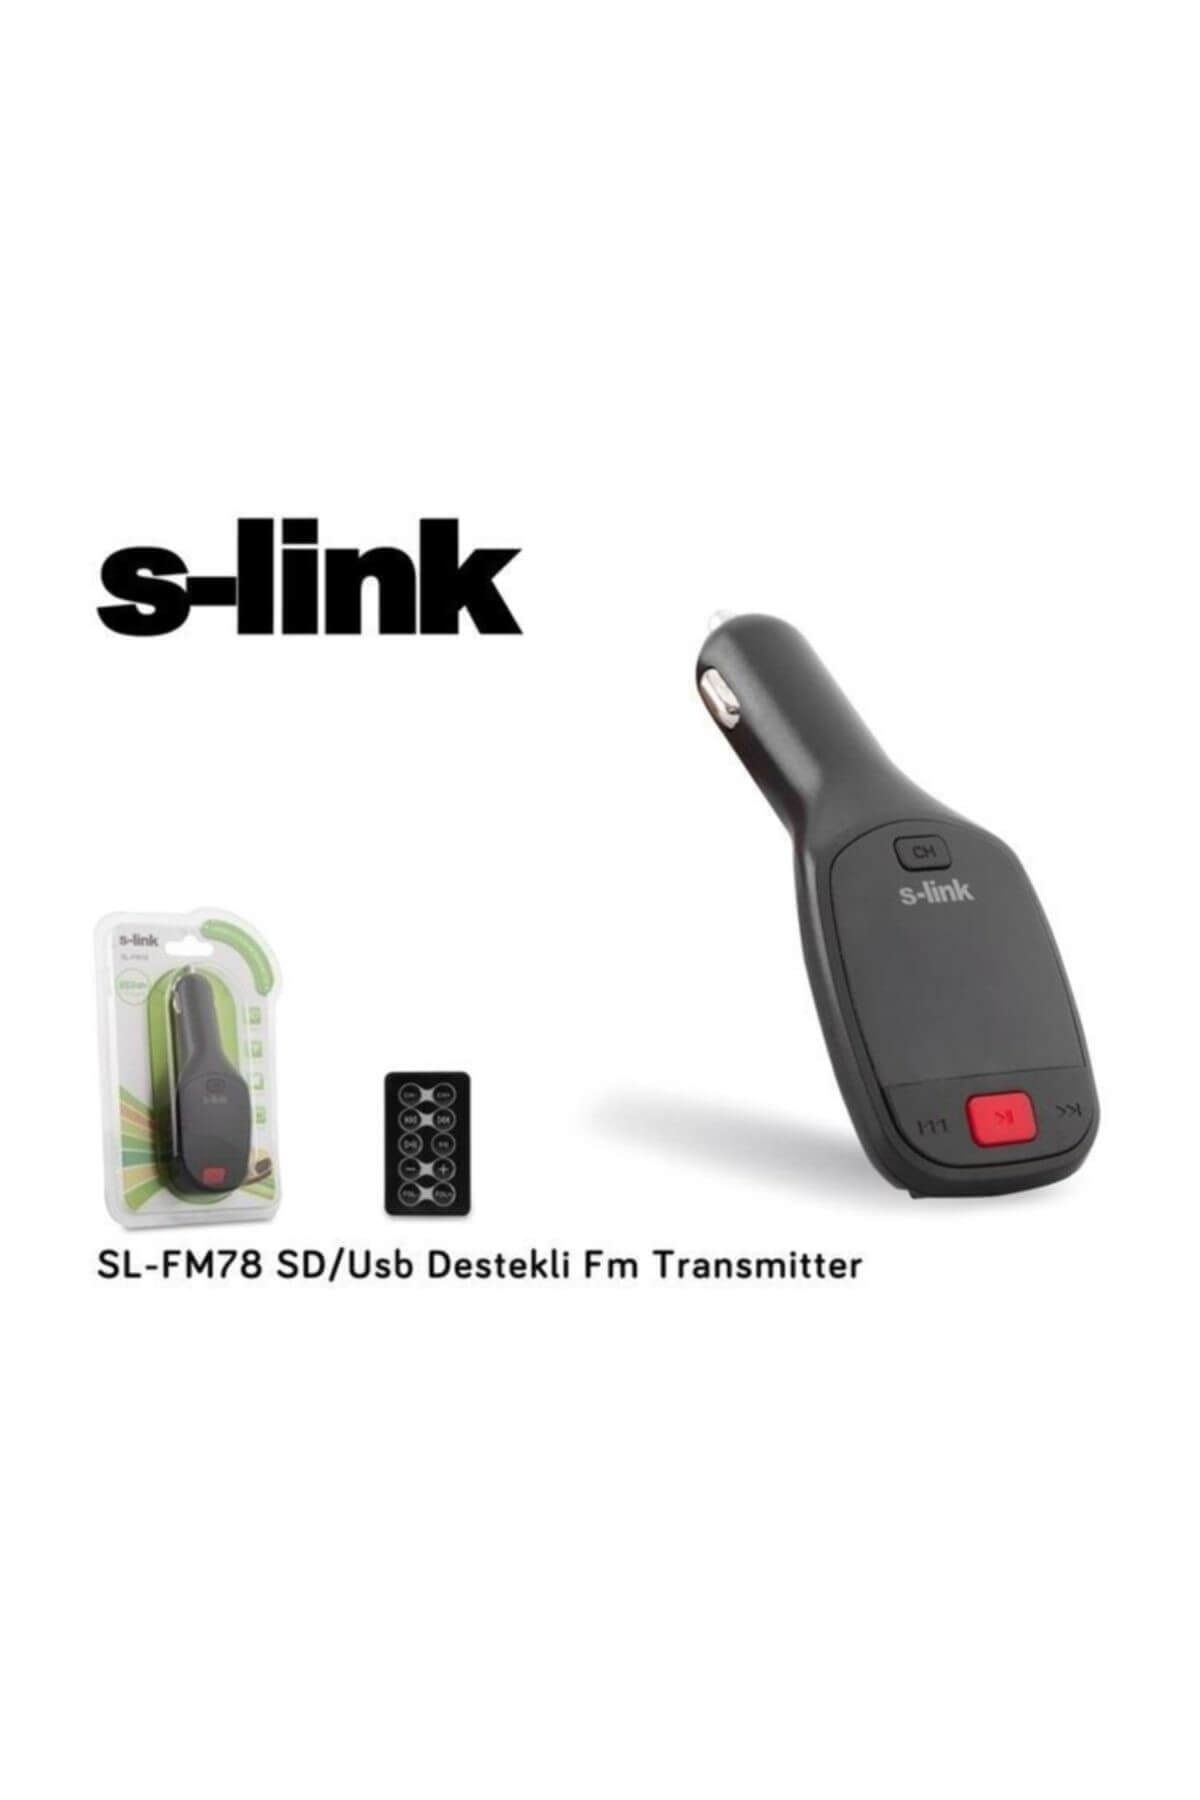 S-Link SD/USB Destekli FM Transmitter SL-FM78